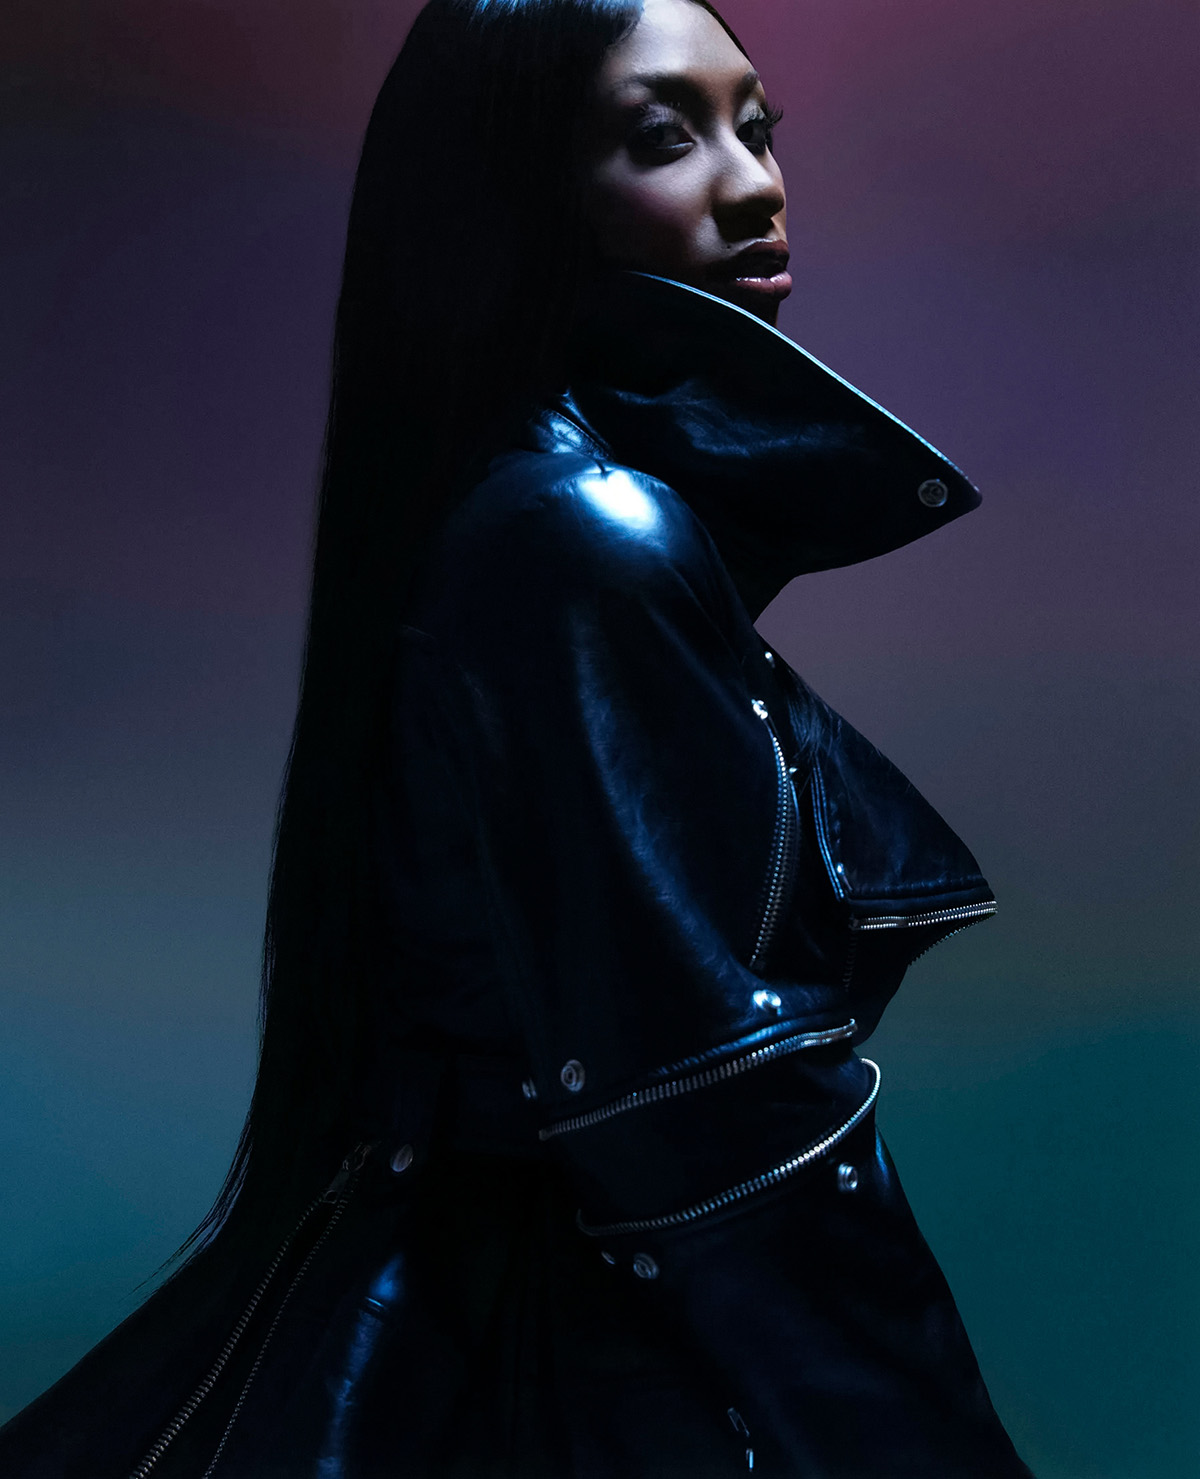 Aya Nakamura covers Vogue France November 2021 by Carlijn Jacobs